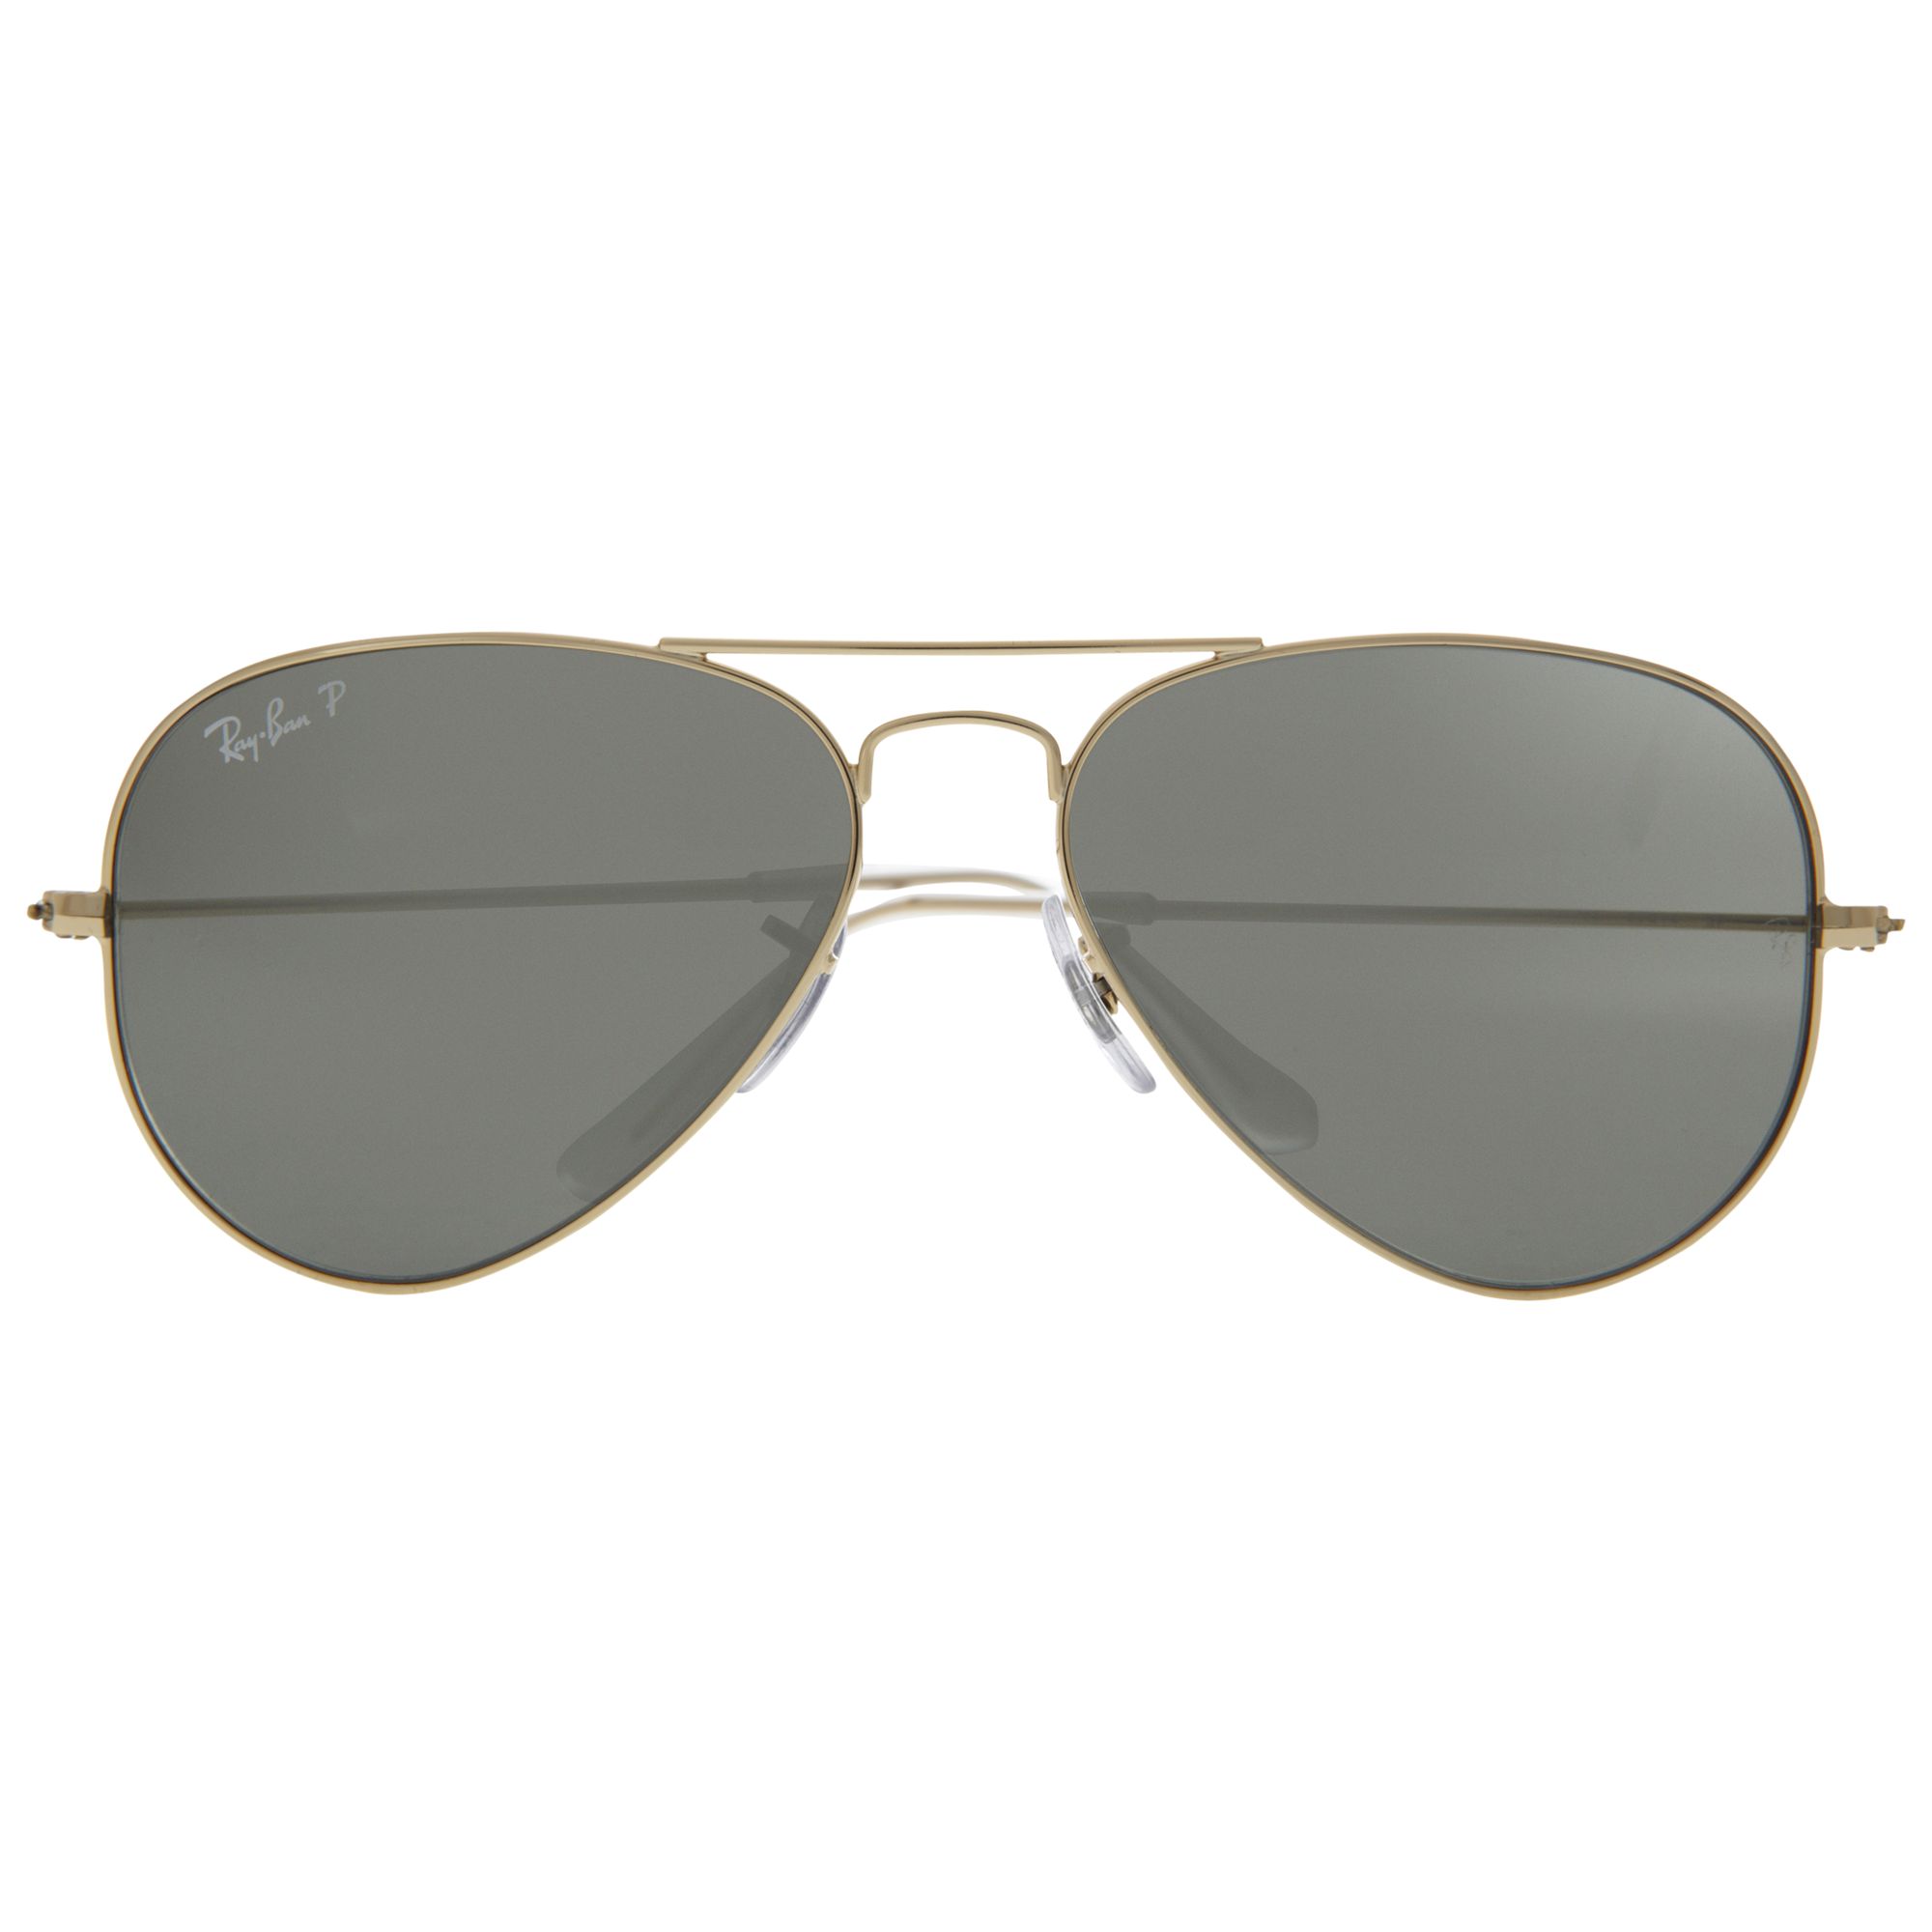 Ray-Ban RB3025 Polarised Aviator Sunglasses, Gold/Grey